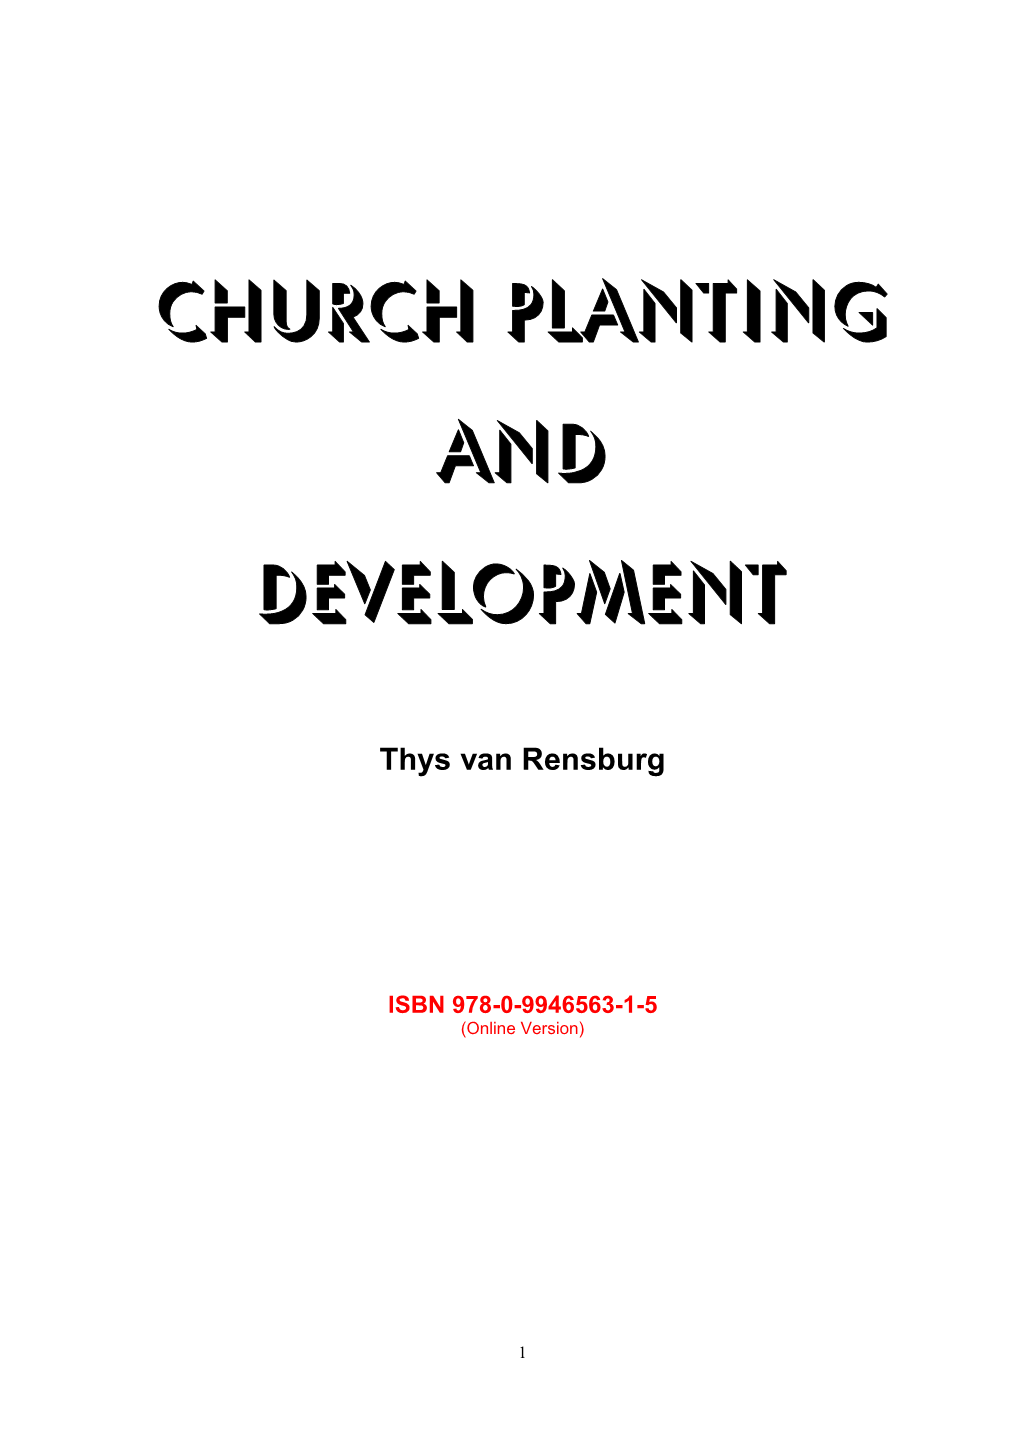 Church Planting and Development